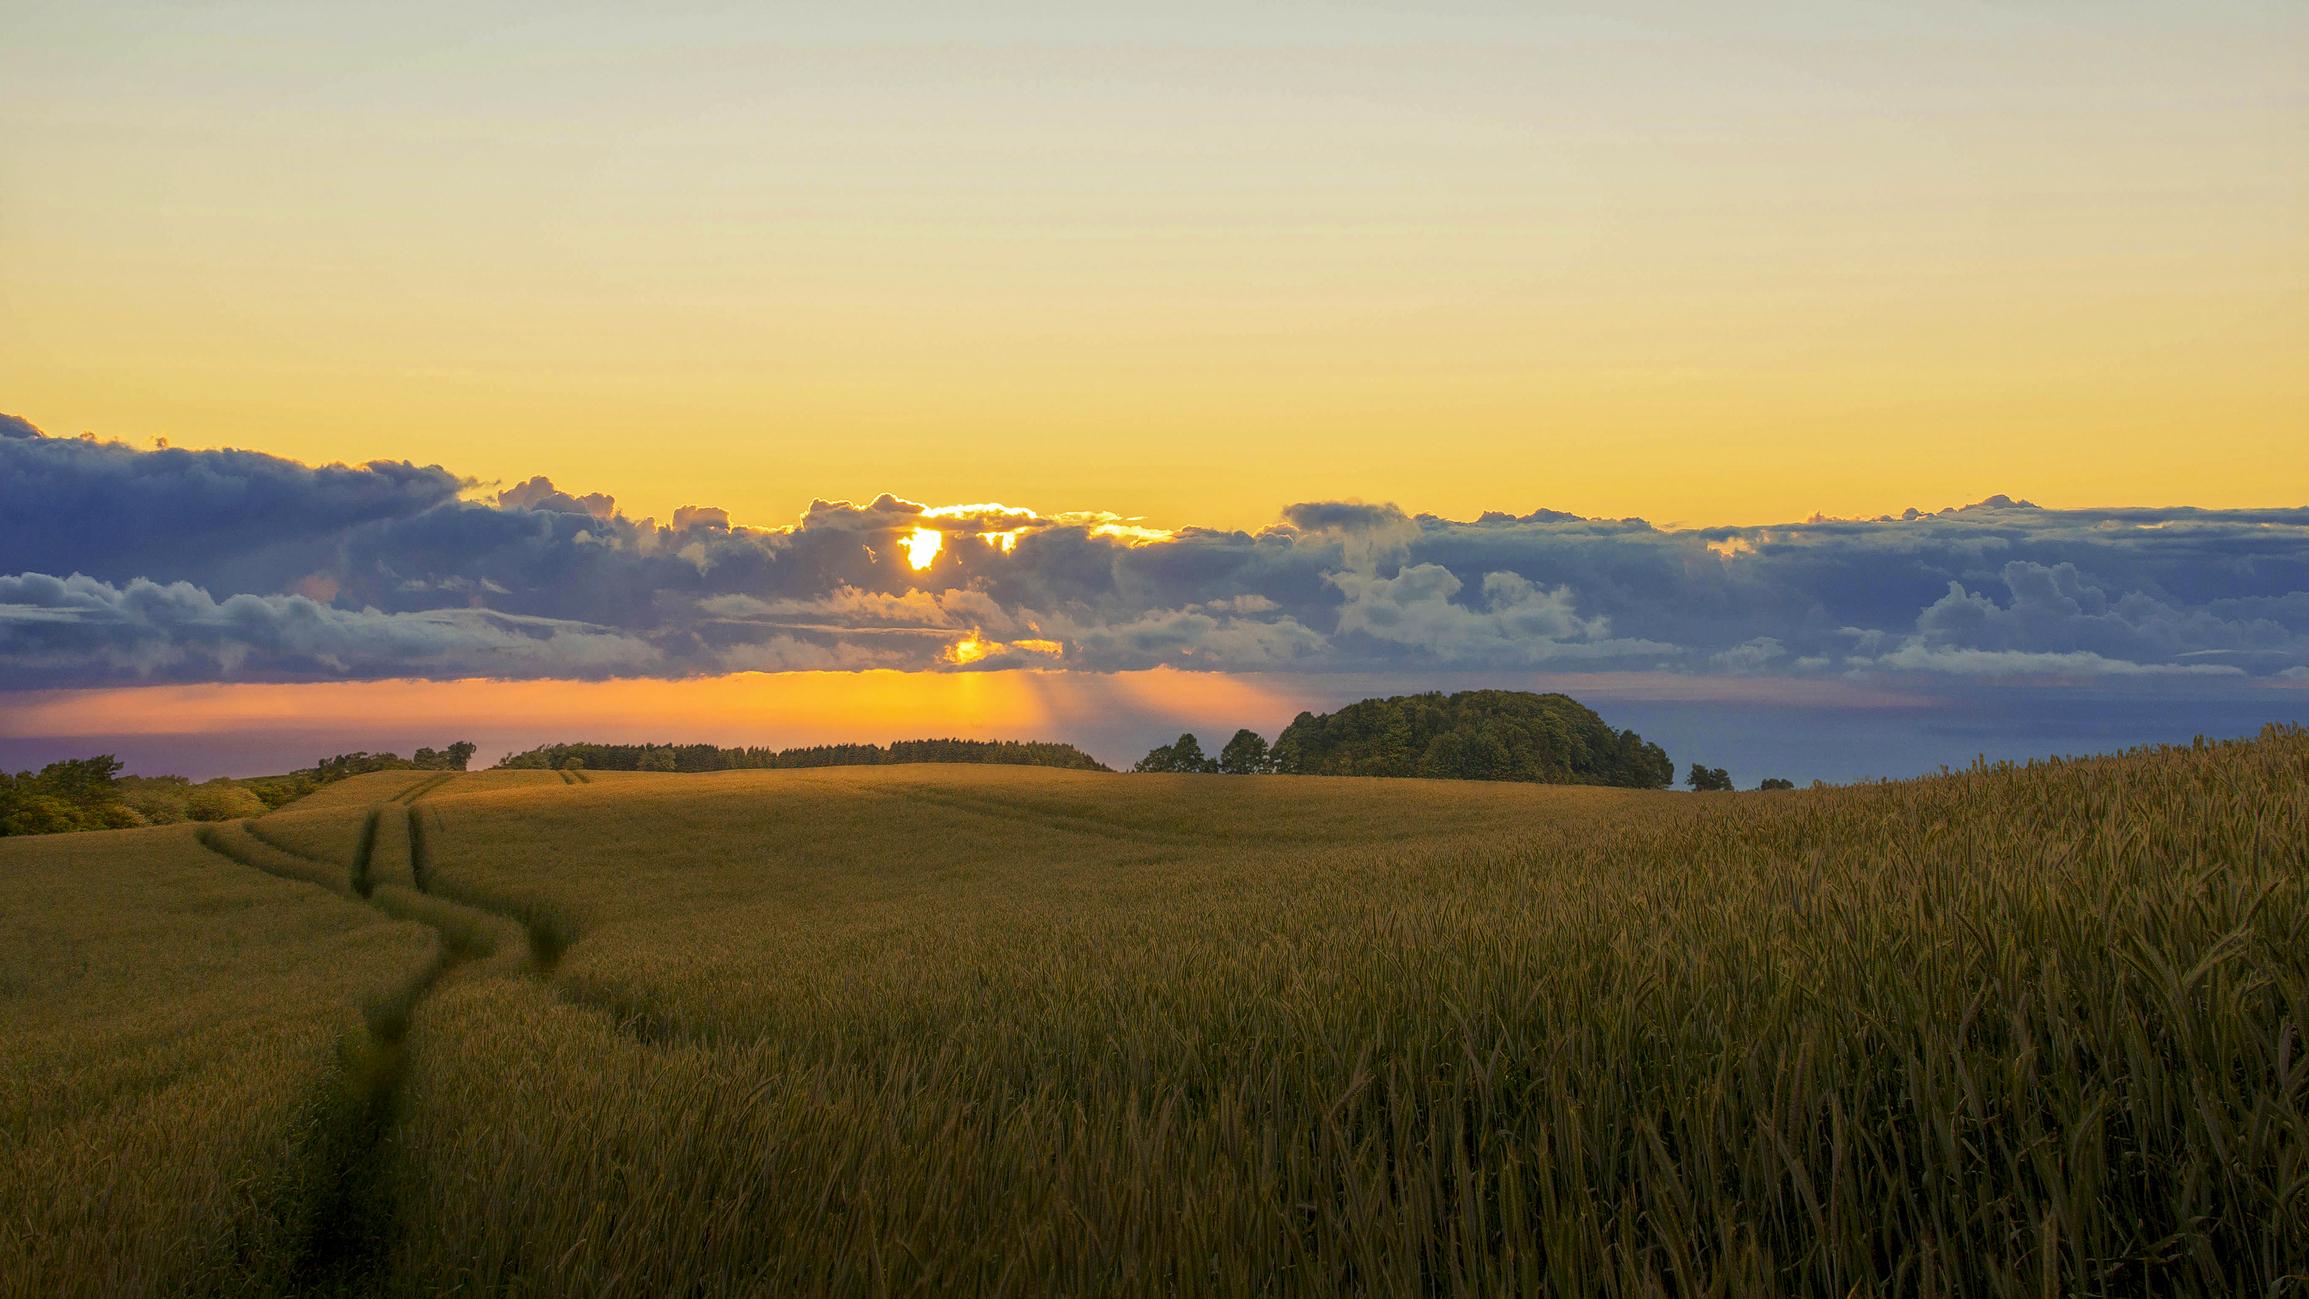 Farmland showing field of wheat